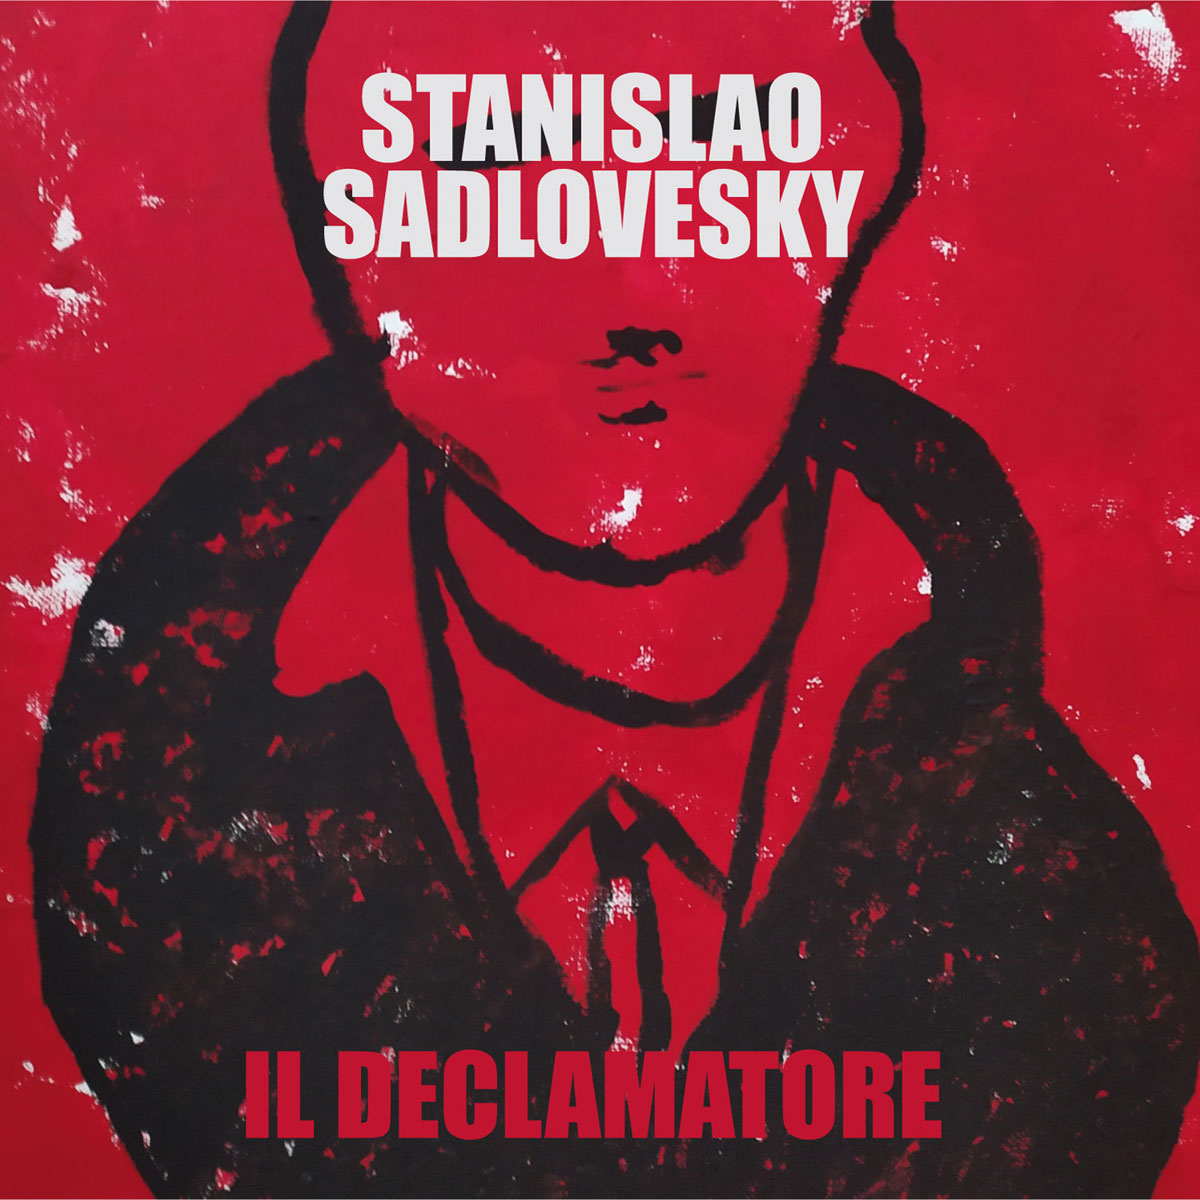 Esce “Il declamatore” il primo album dei Stanislao Sadlovesky